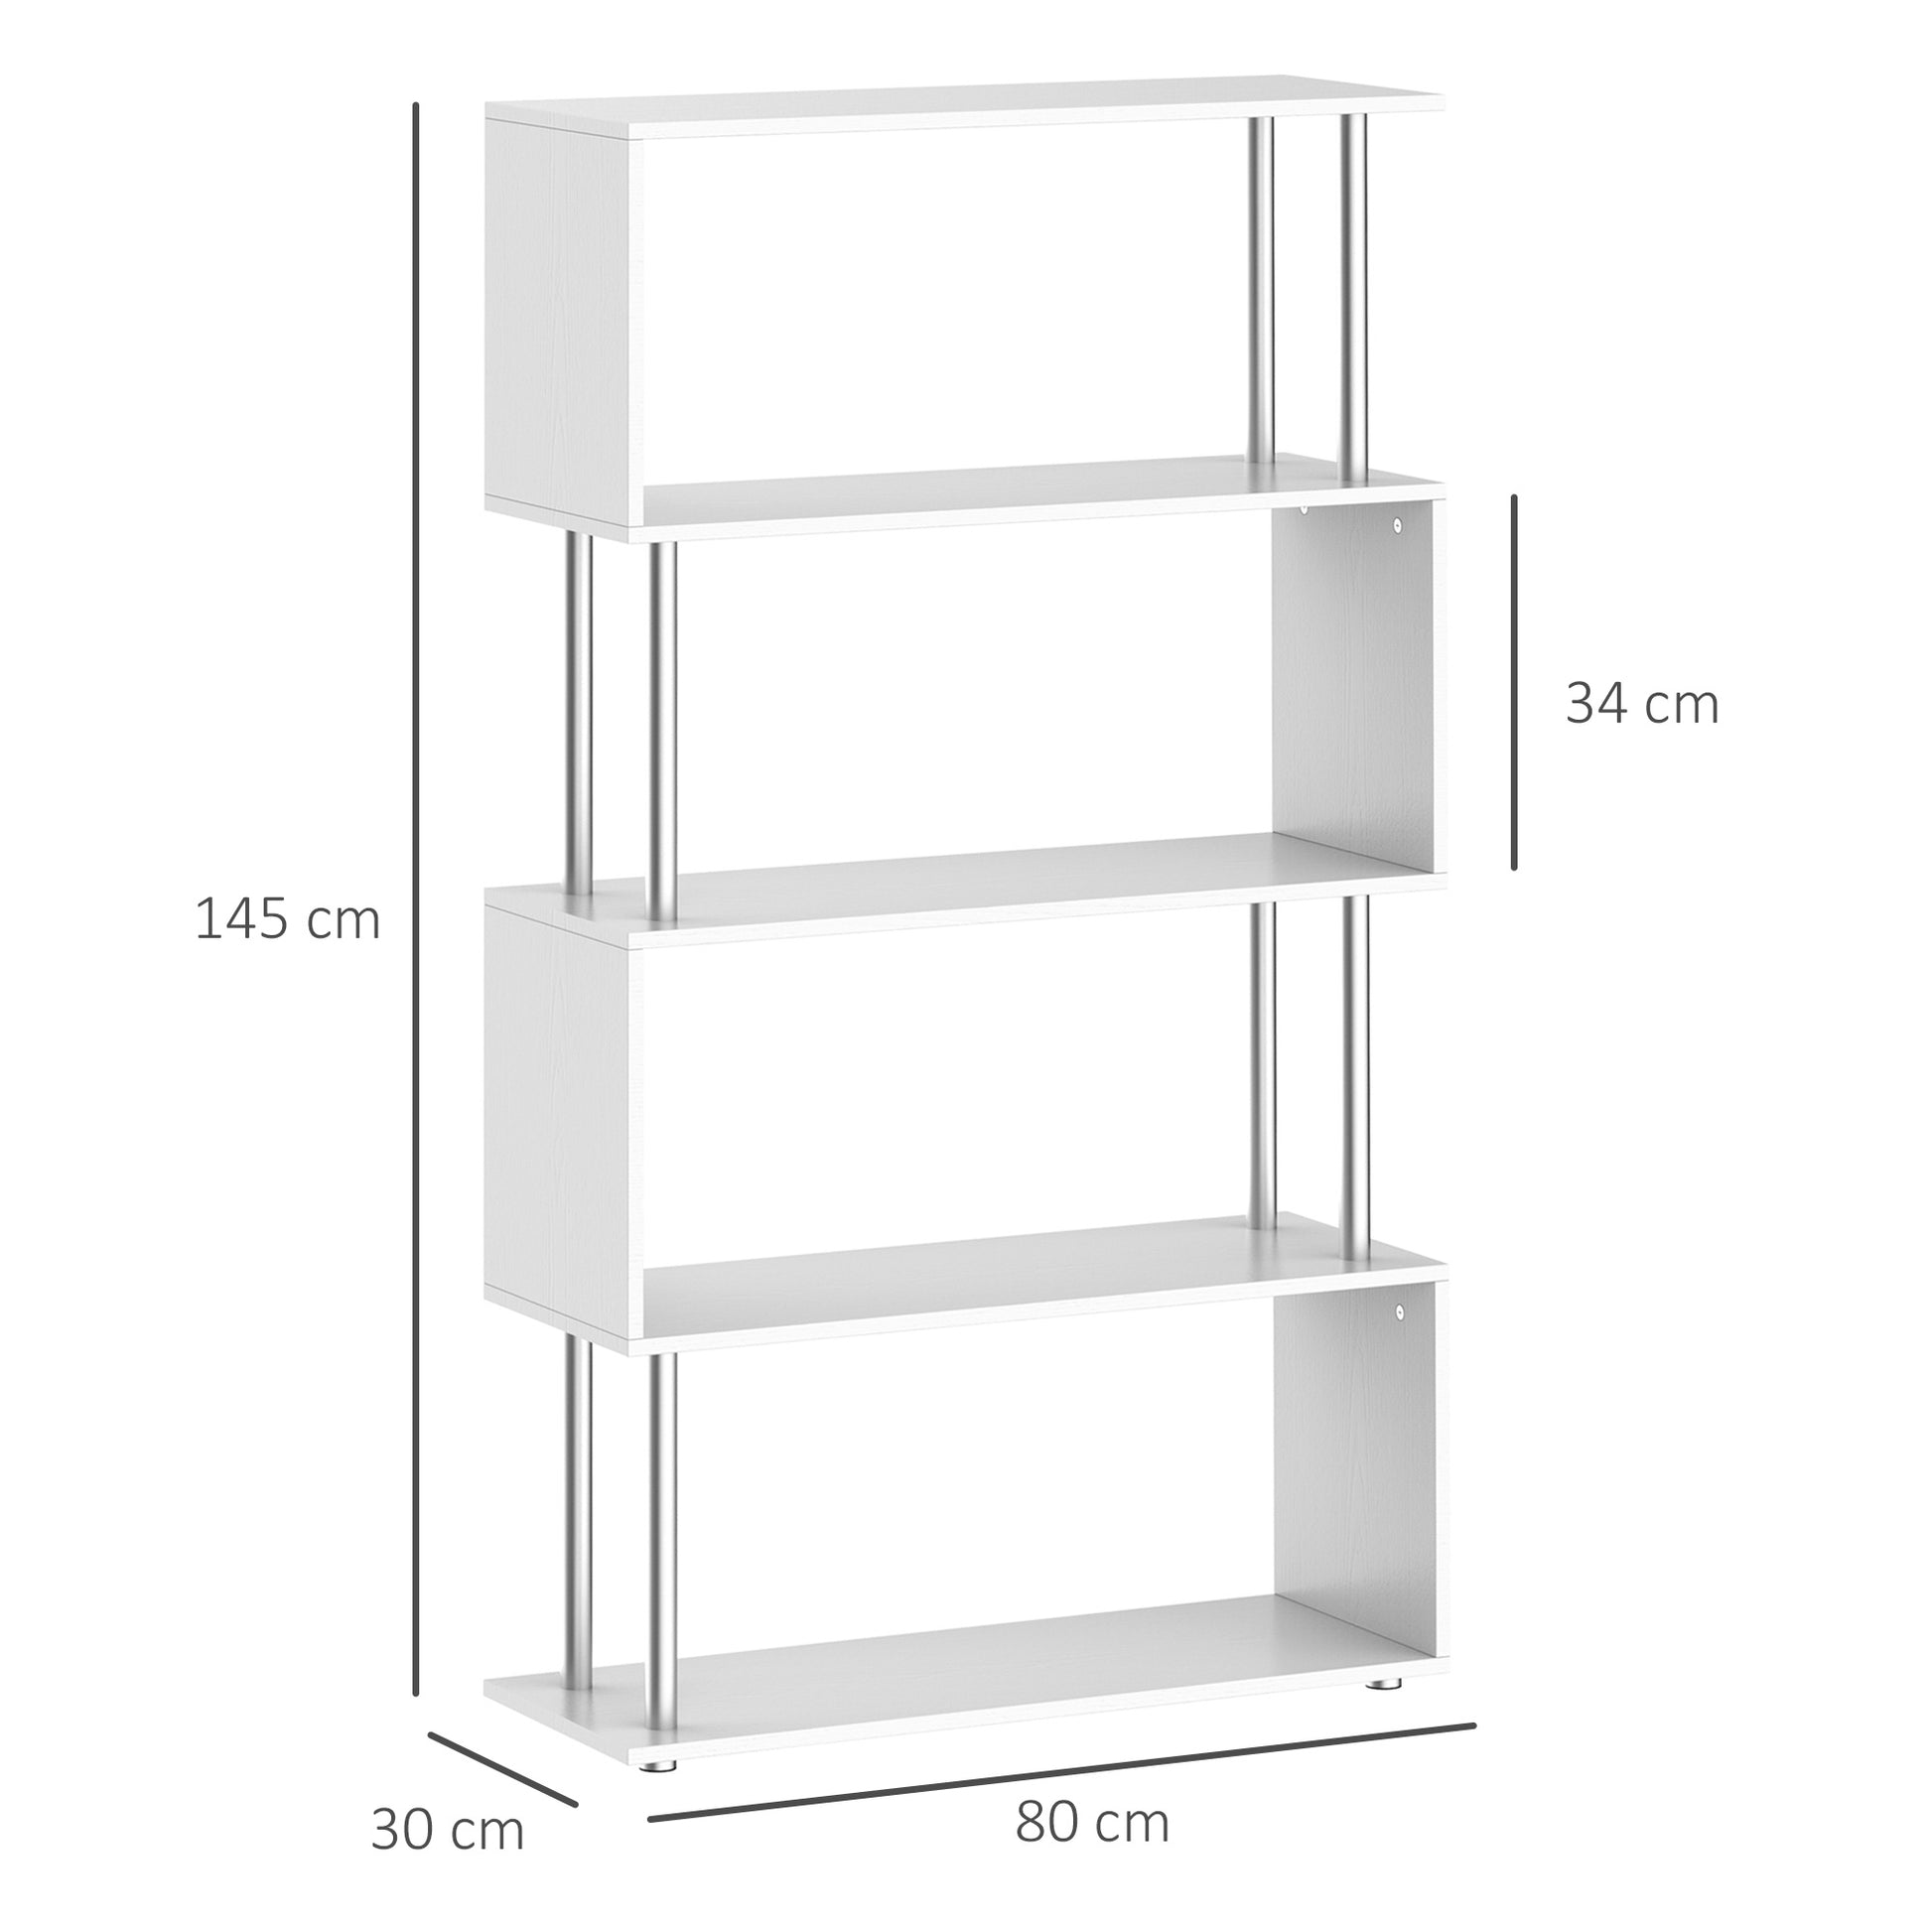 Wooden S Shape Bookcase, Bookshelf Dividers Storage Display Unit, Shelf, Shelving Units, White, HOMCOM, 3